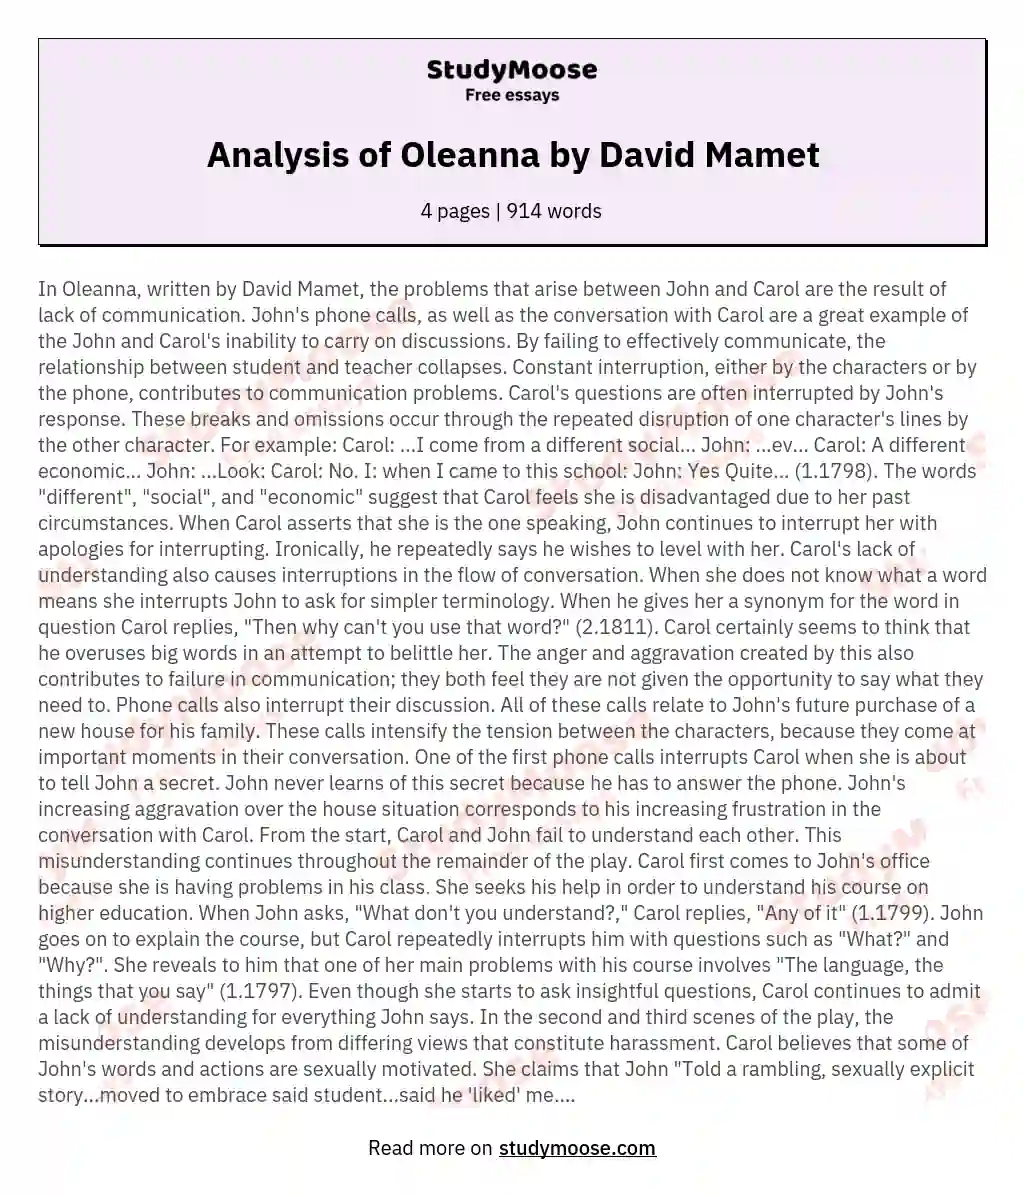 Analysis of Oleanna by David Mamet essay